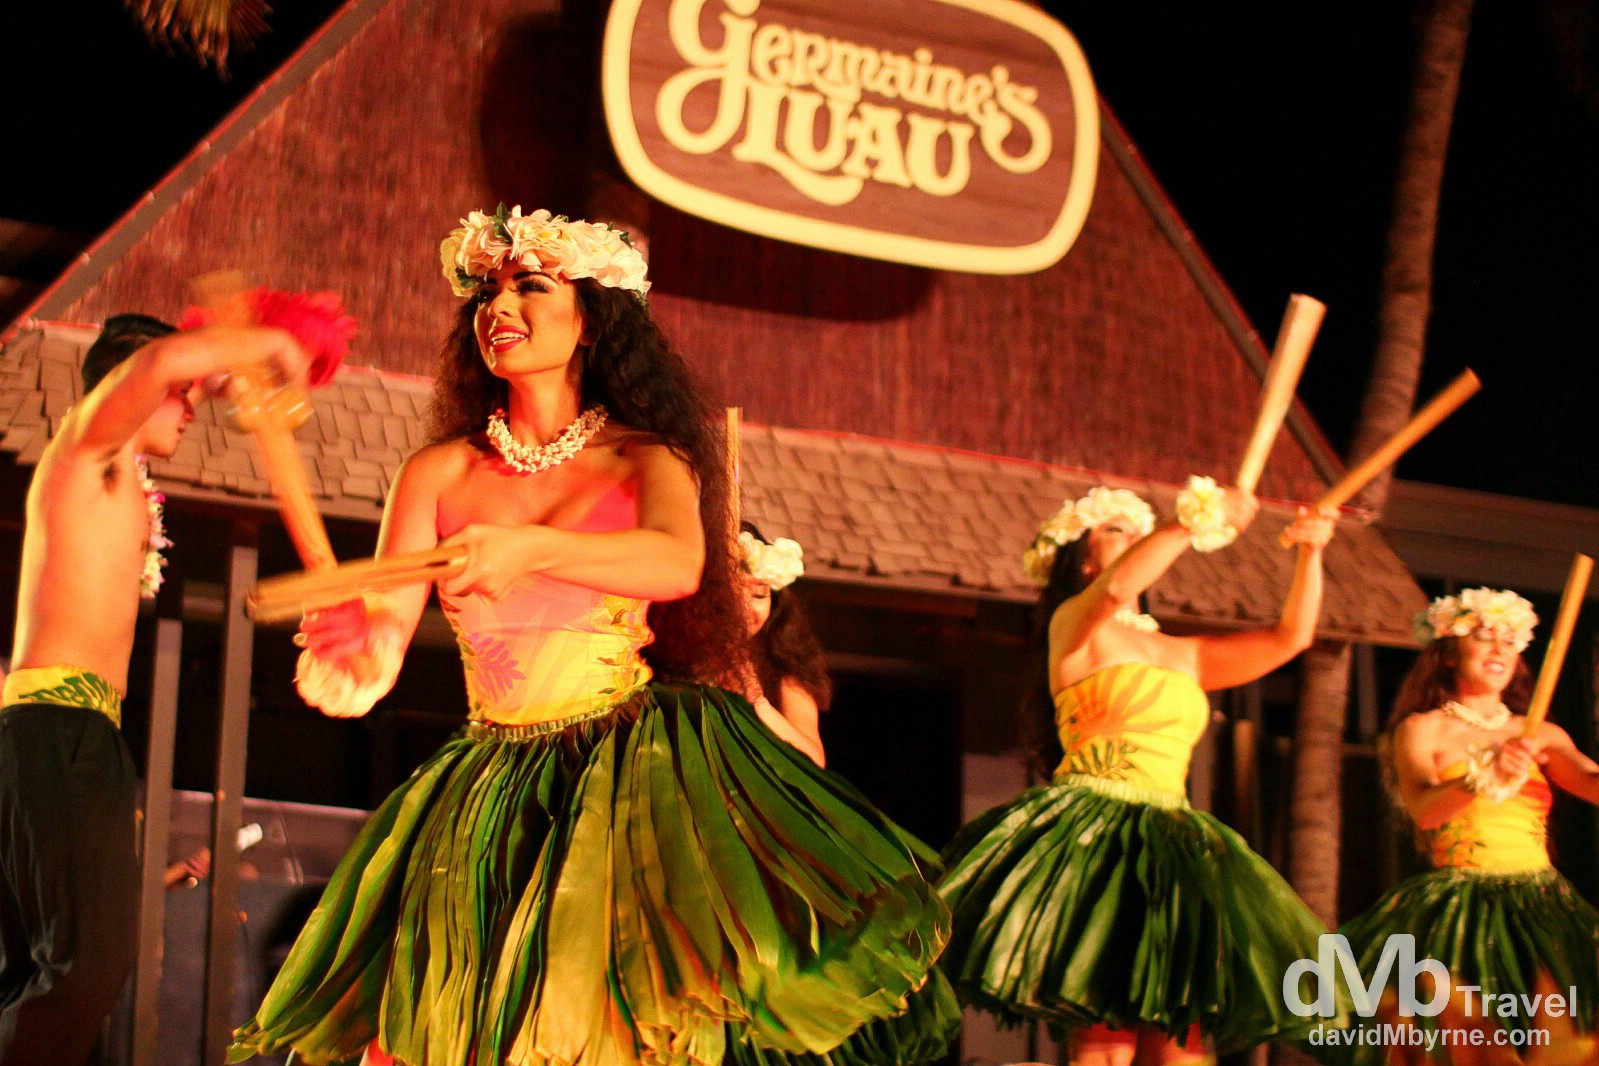 Dancers at Germaine's Luau, O'ahu, Hawaii. February 27th 2013.